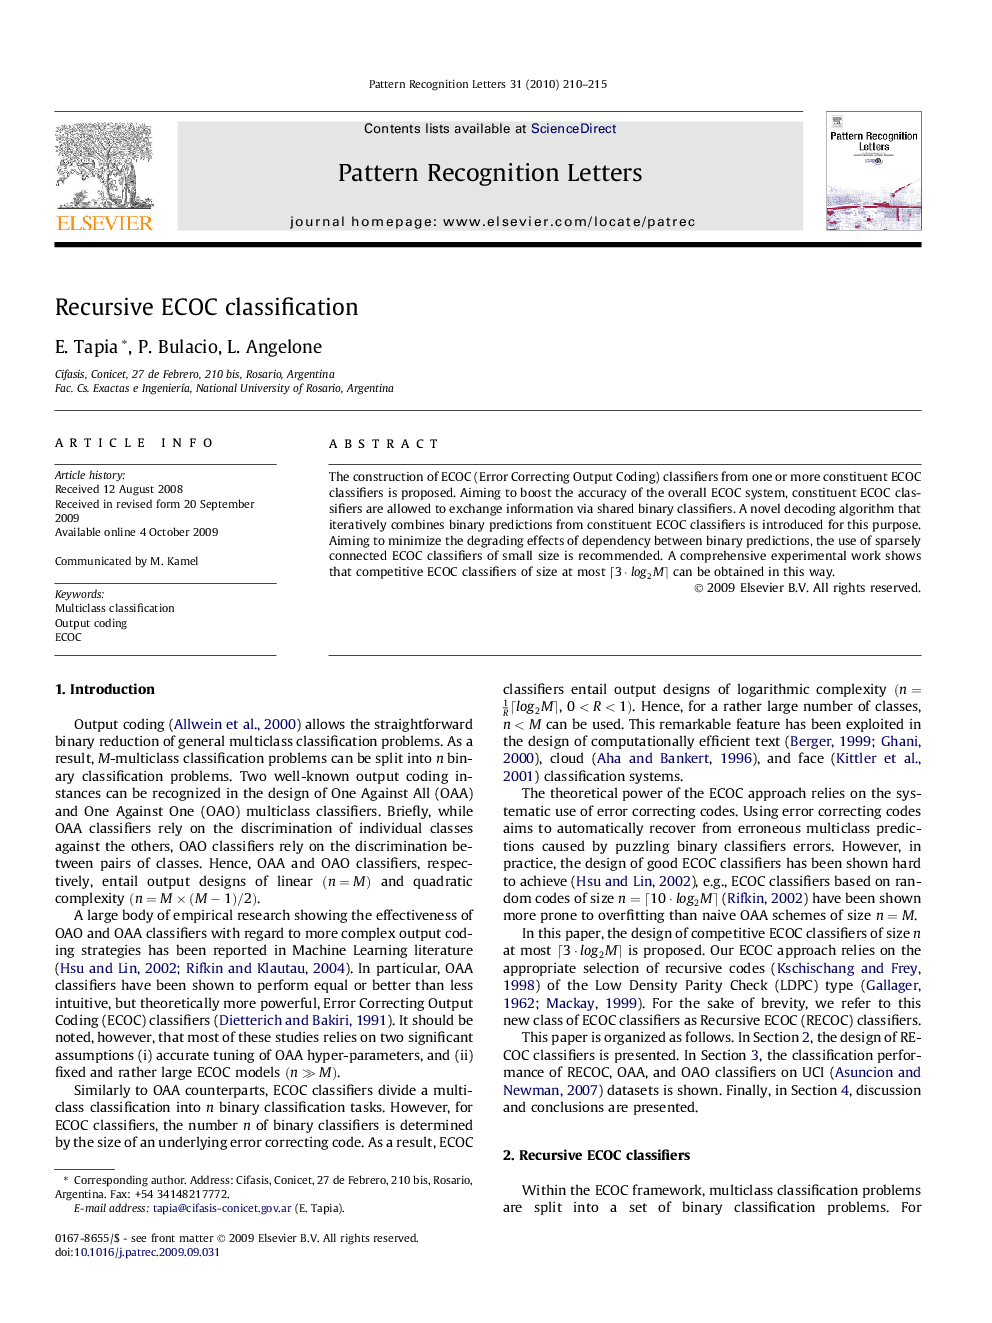 Recursive ECOC classification